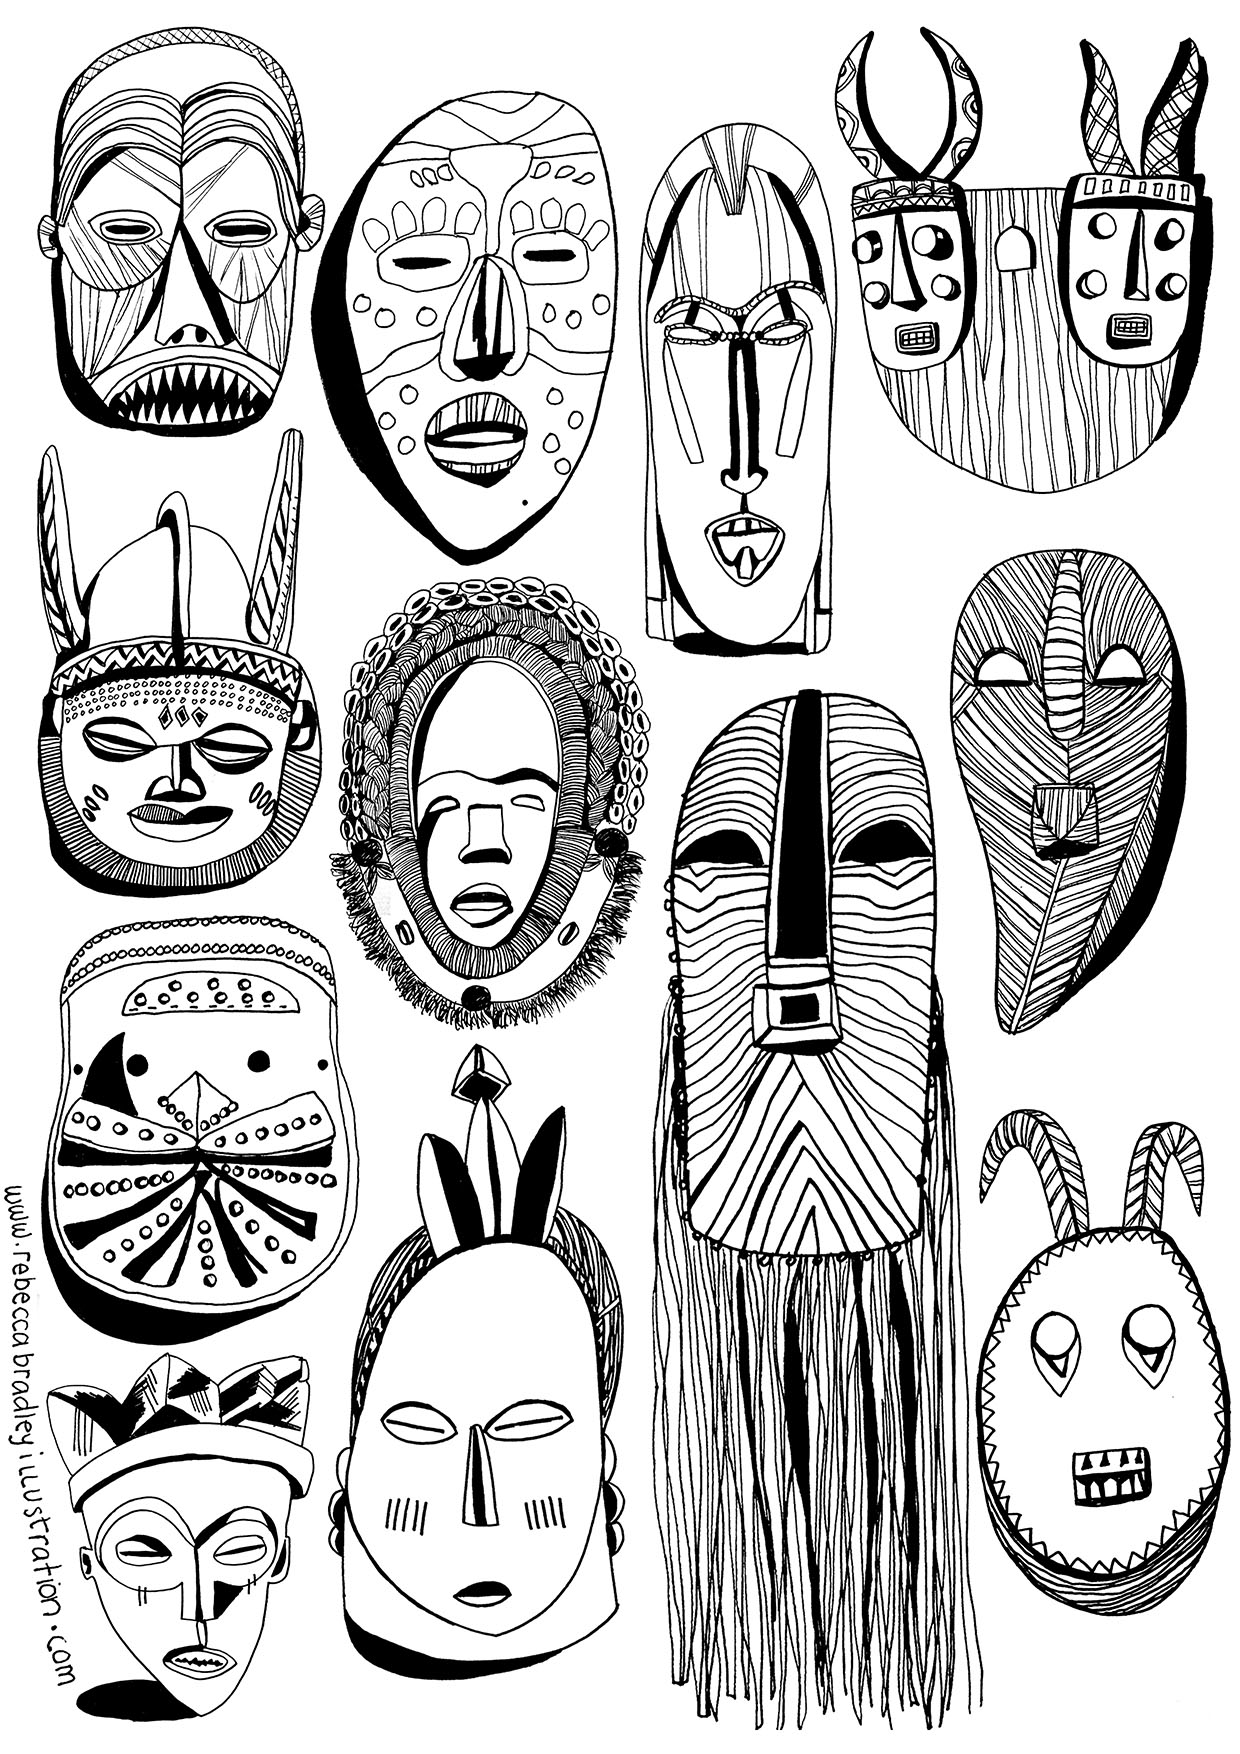 African Masks 